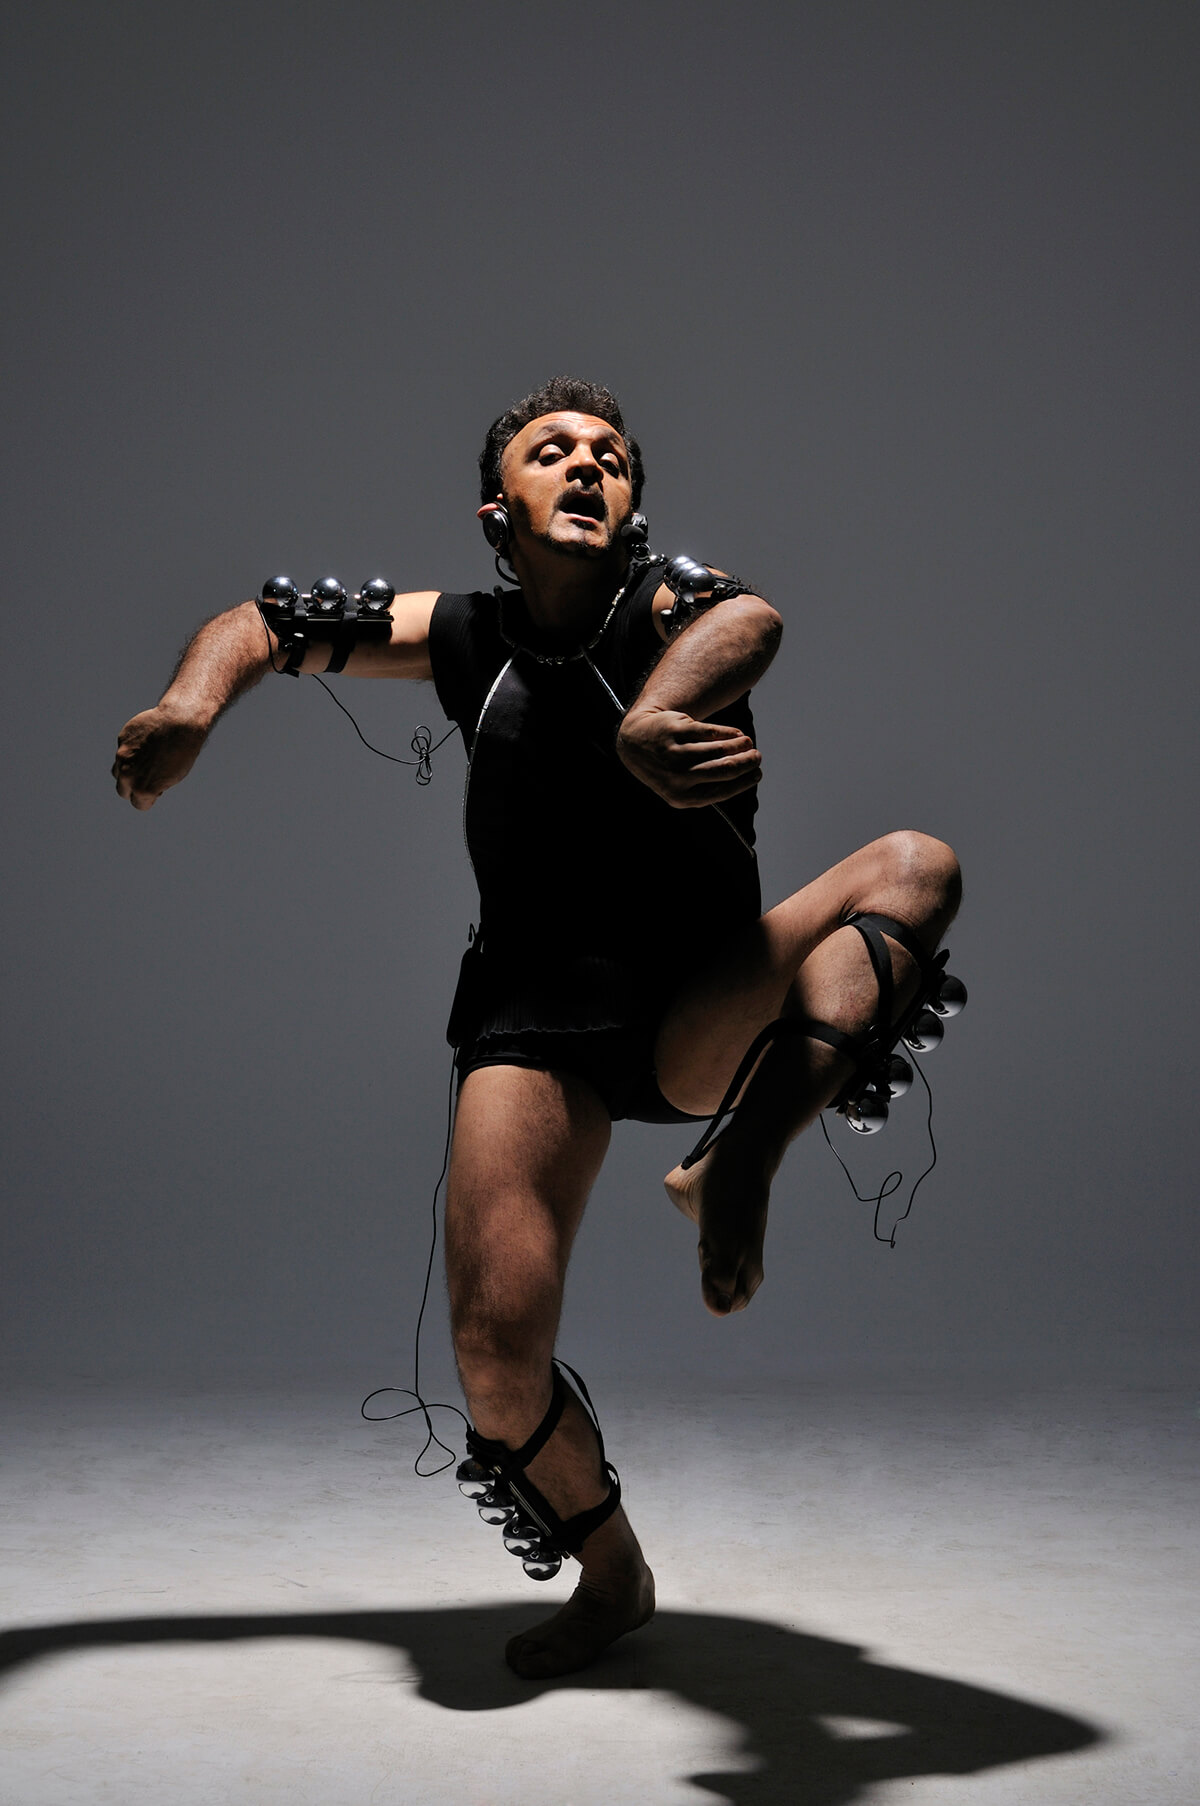 Sinha Danse 2008 - Zeros & Ones - Roger Sinha Image credit: Michael Slobodian